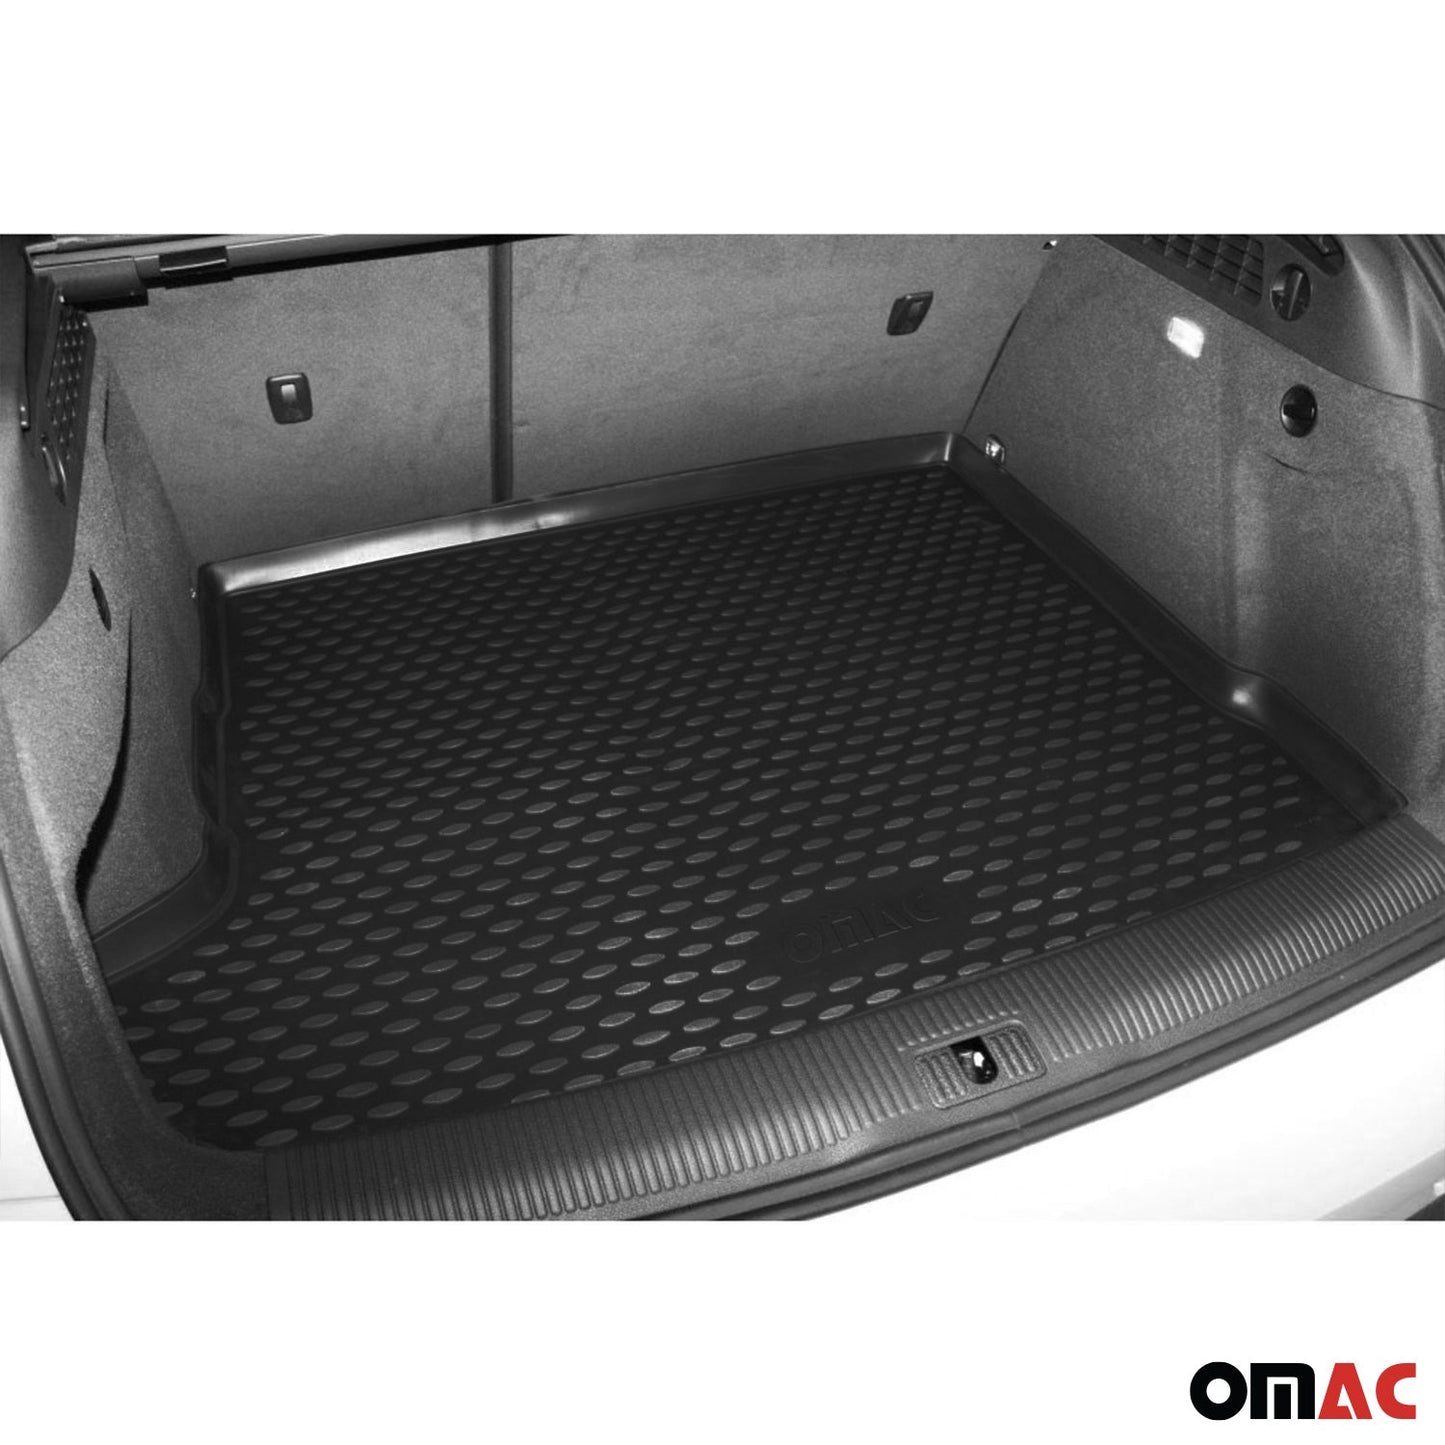 OMAC Cargo Mats Liner for Honda Element 2003-2011 Waterproof TPE Black 3489250